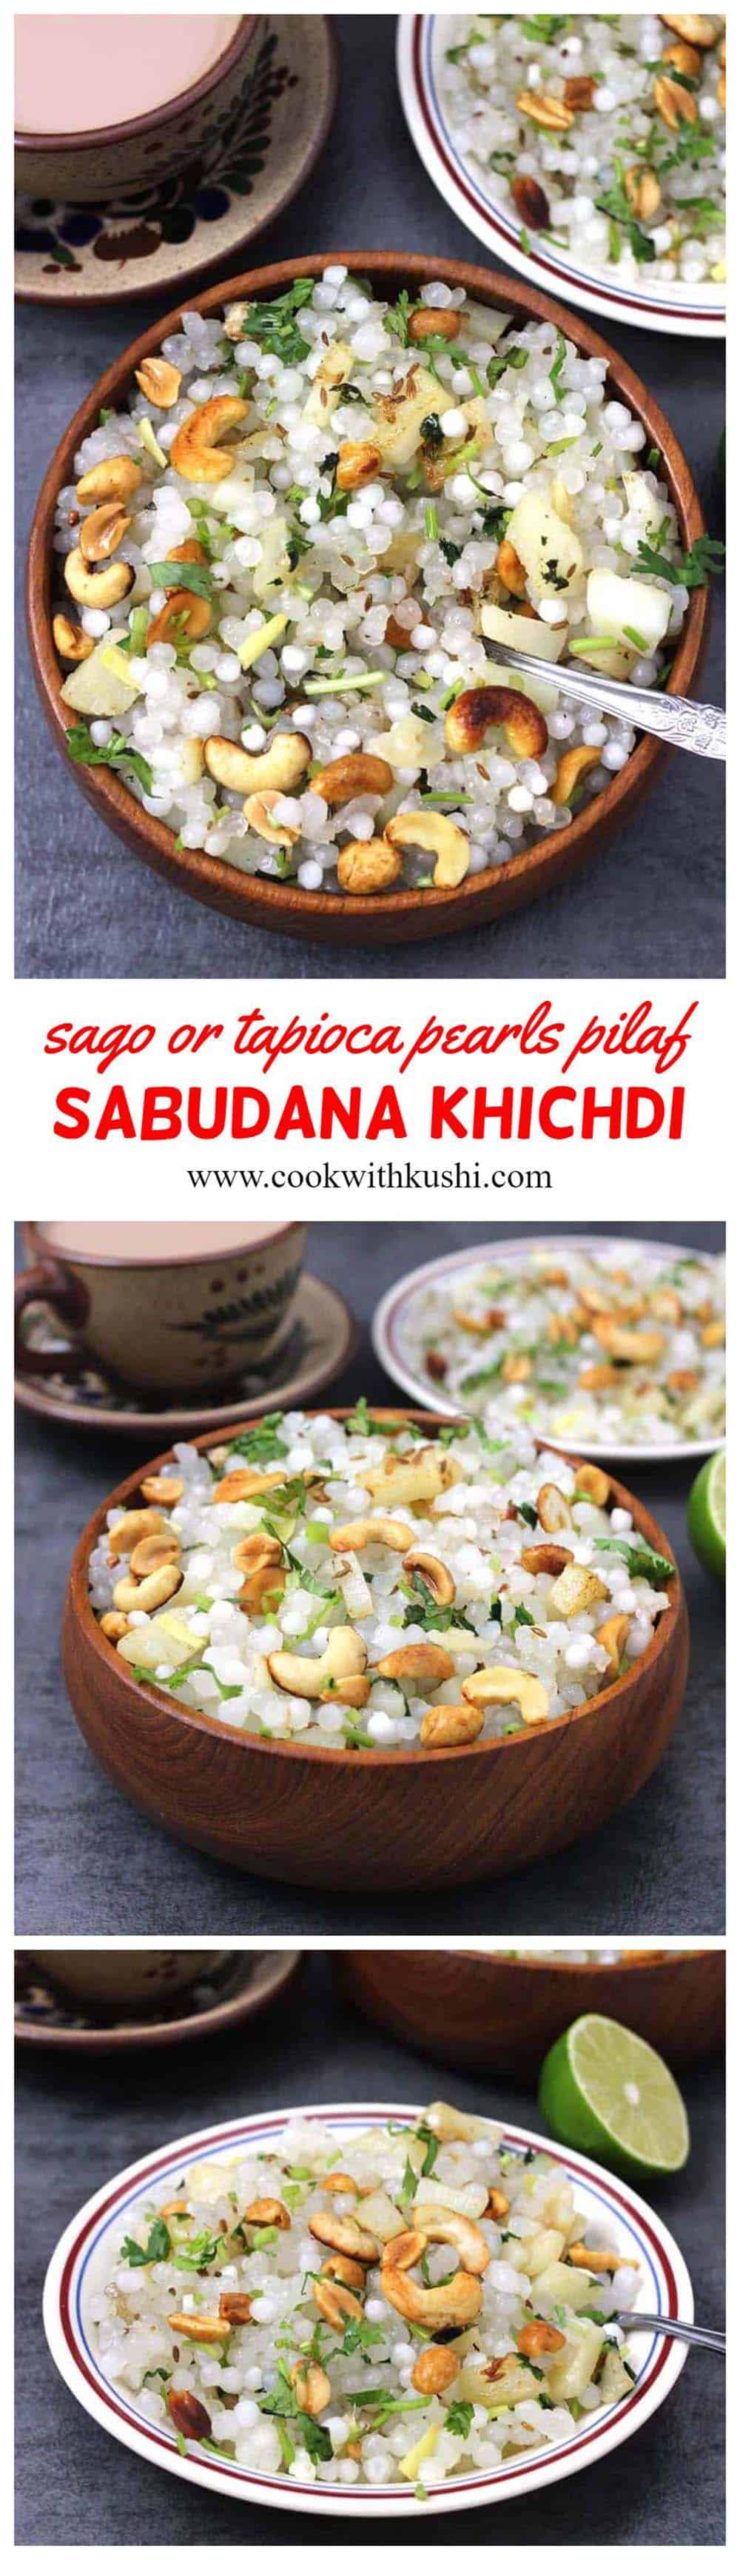 Sabudana Khichdi is popular Indian dish or comfort food prepared using sago or tapioca pearls, potatoes. It is chewy in texture.#sabudana #sago #tapiocapearls #khichdi #upma #usal #fastingrecipes #vratrecipes #upvasrecipes #indianbreakfast #indiansnack #vegetarian #vegan #glutenfree #navratri #shivratri #ekadashi #ganeshchaturthi